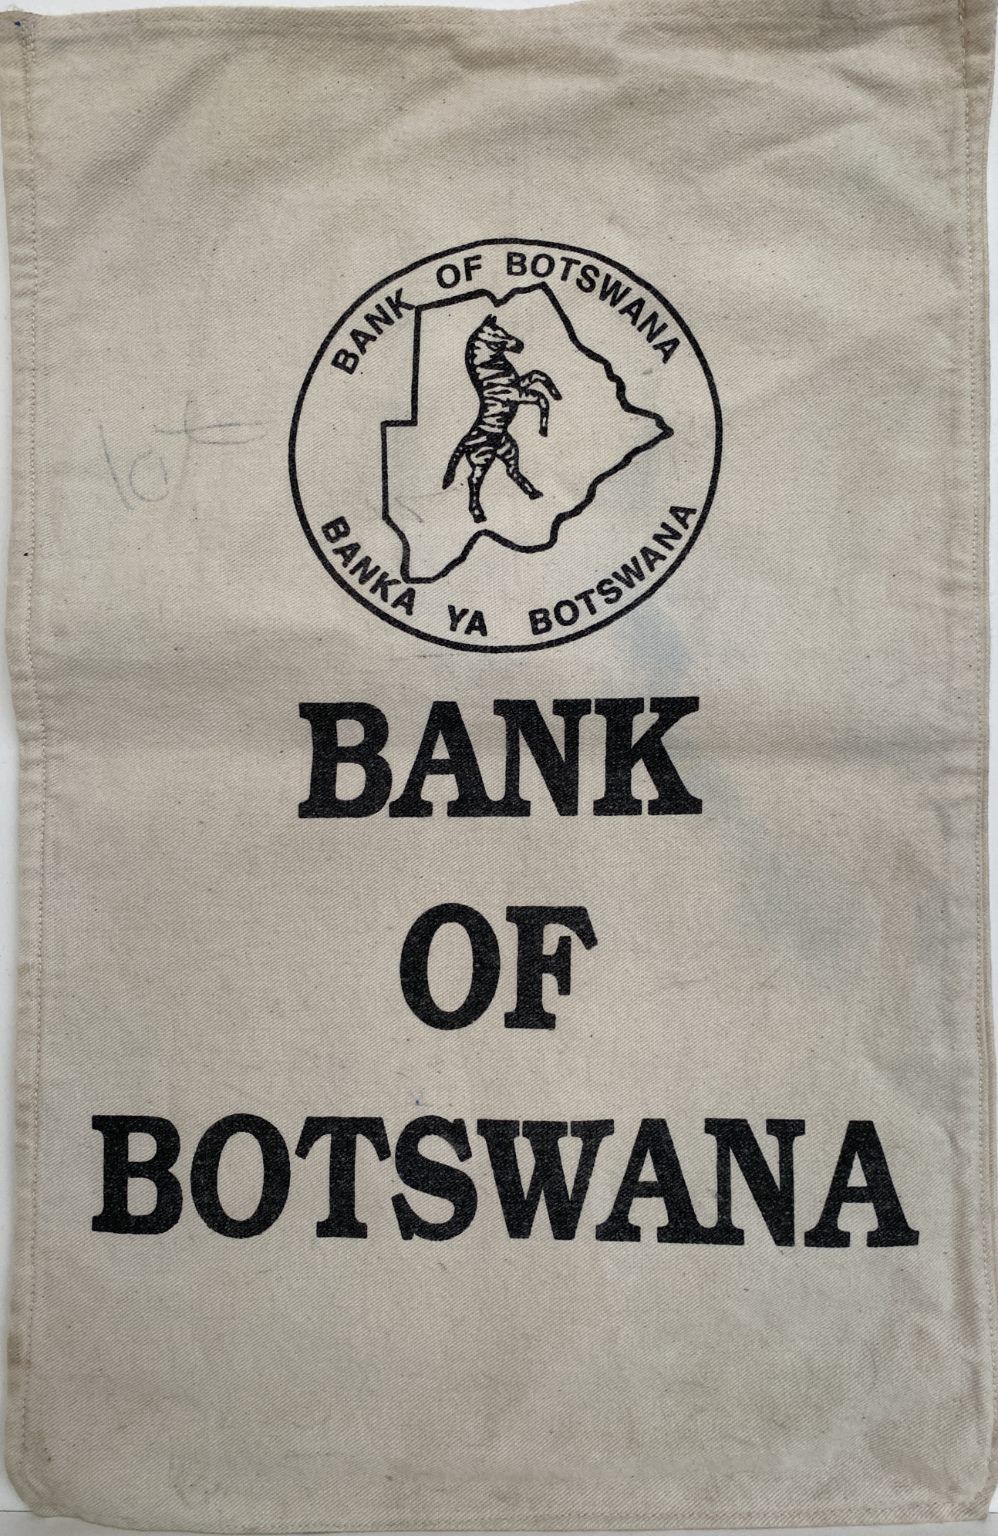 OLD BANKING MEMORABILIA: Cloth cash bag - Bank of Botswana